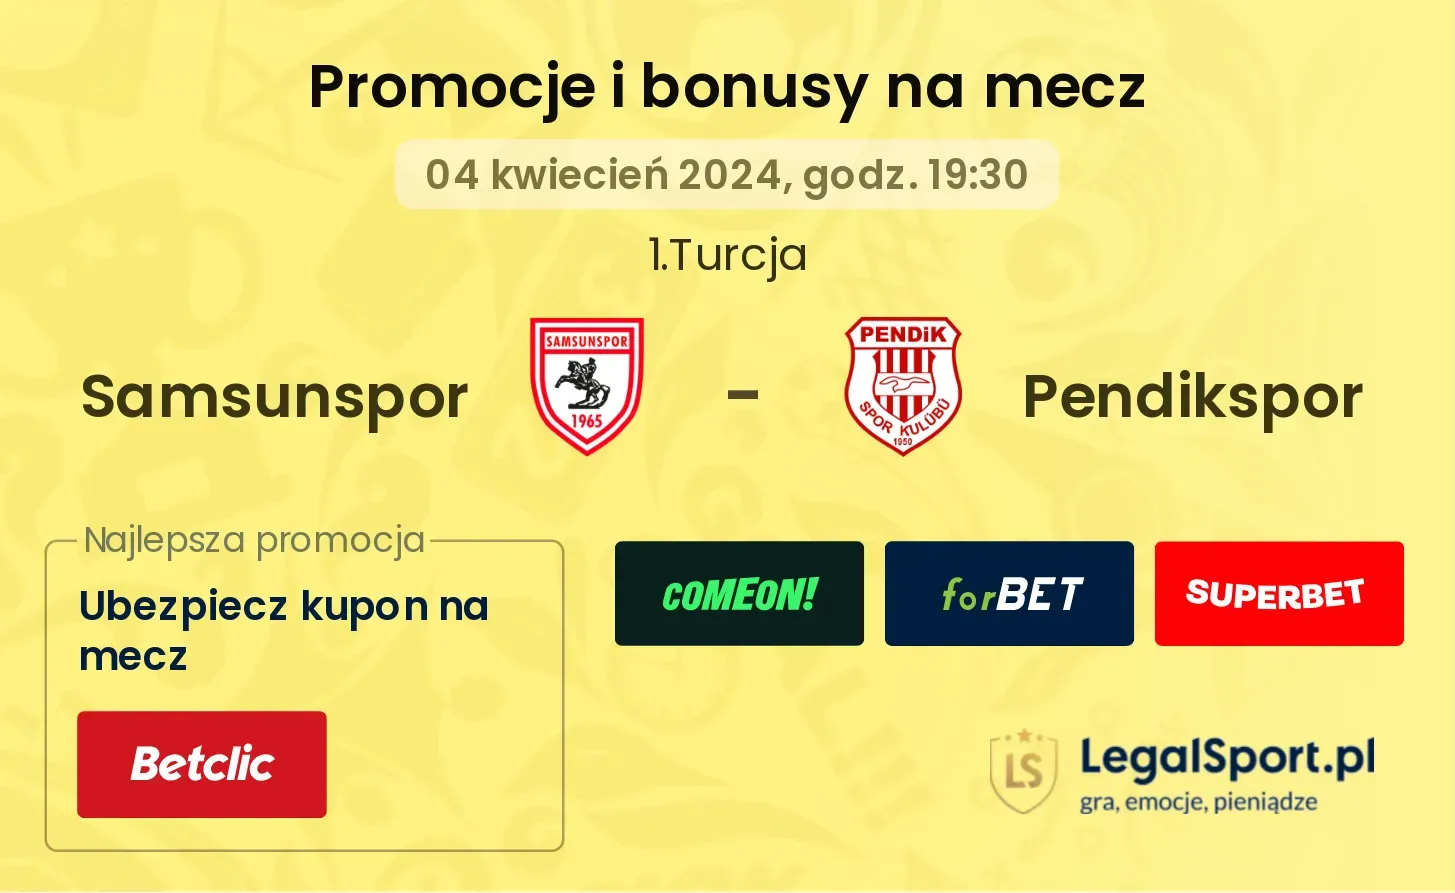 Samsunspor - Pendikspor promocje bonusy na mecz